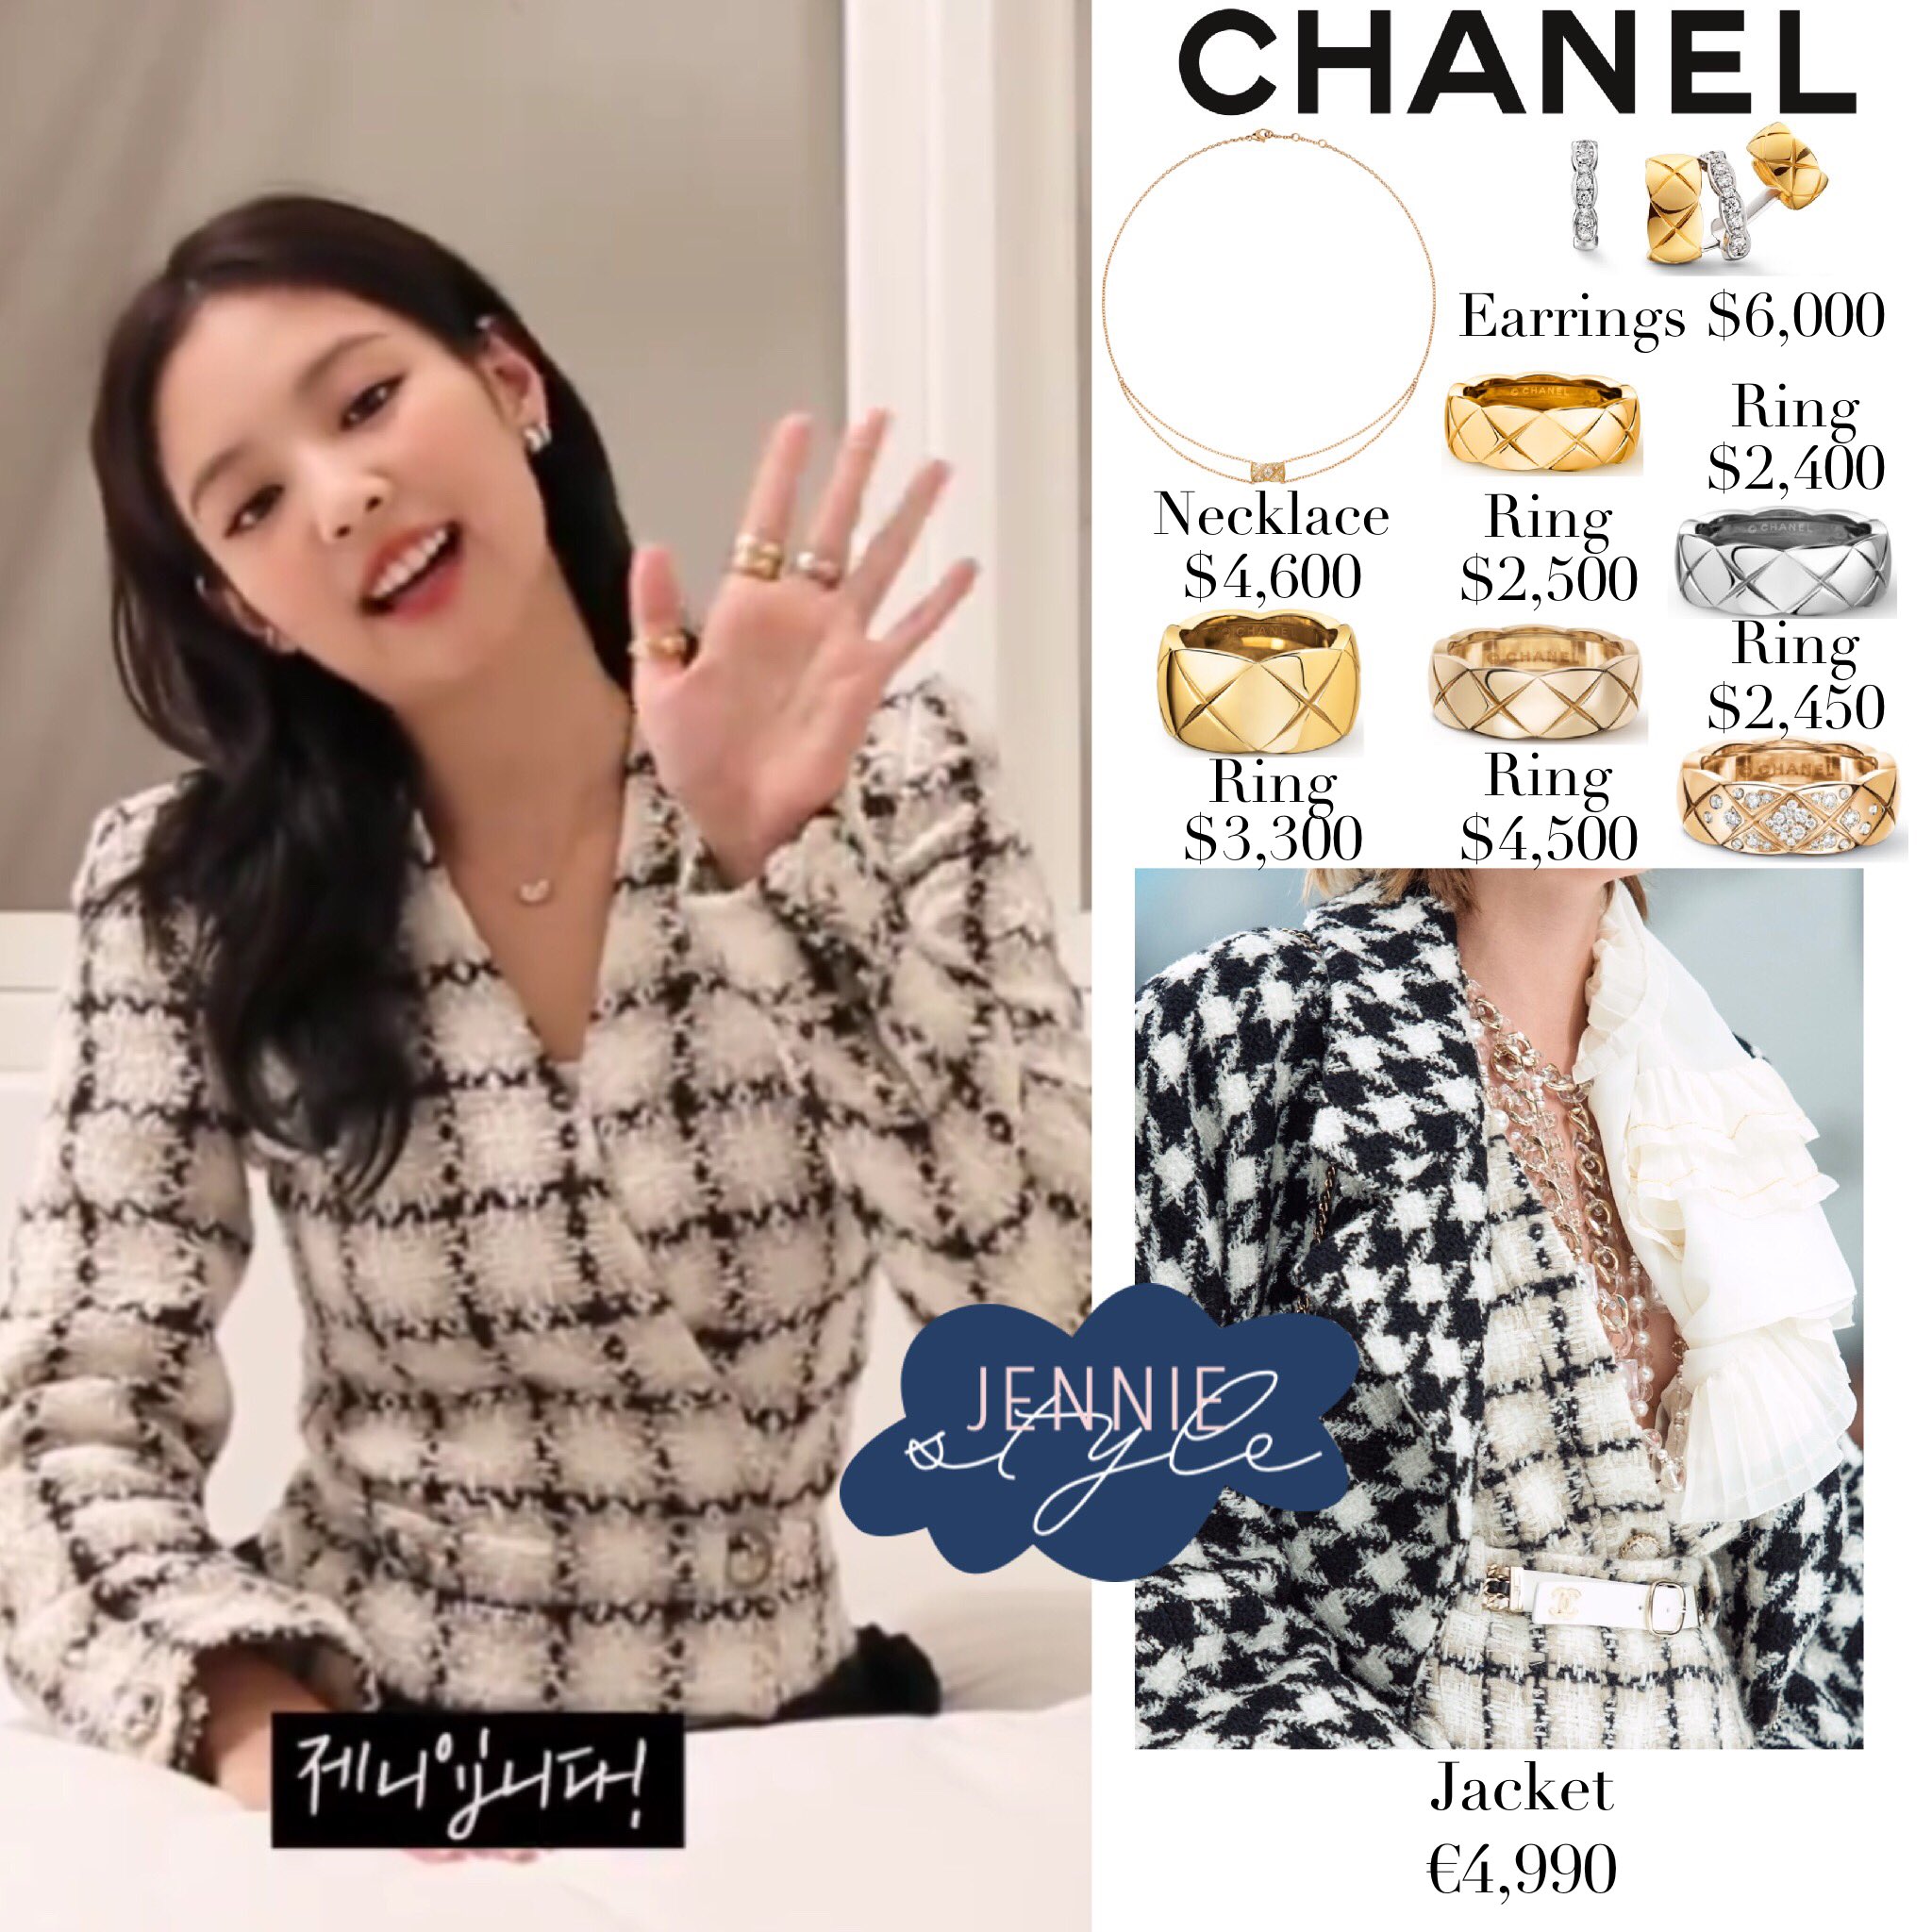 Chanel Coco Crush Blackpinks Jennie Models The Latest Jewellery Designs   Tatler Asia